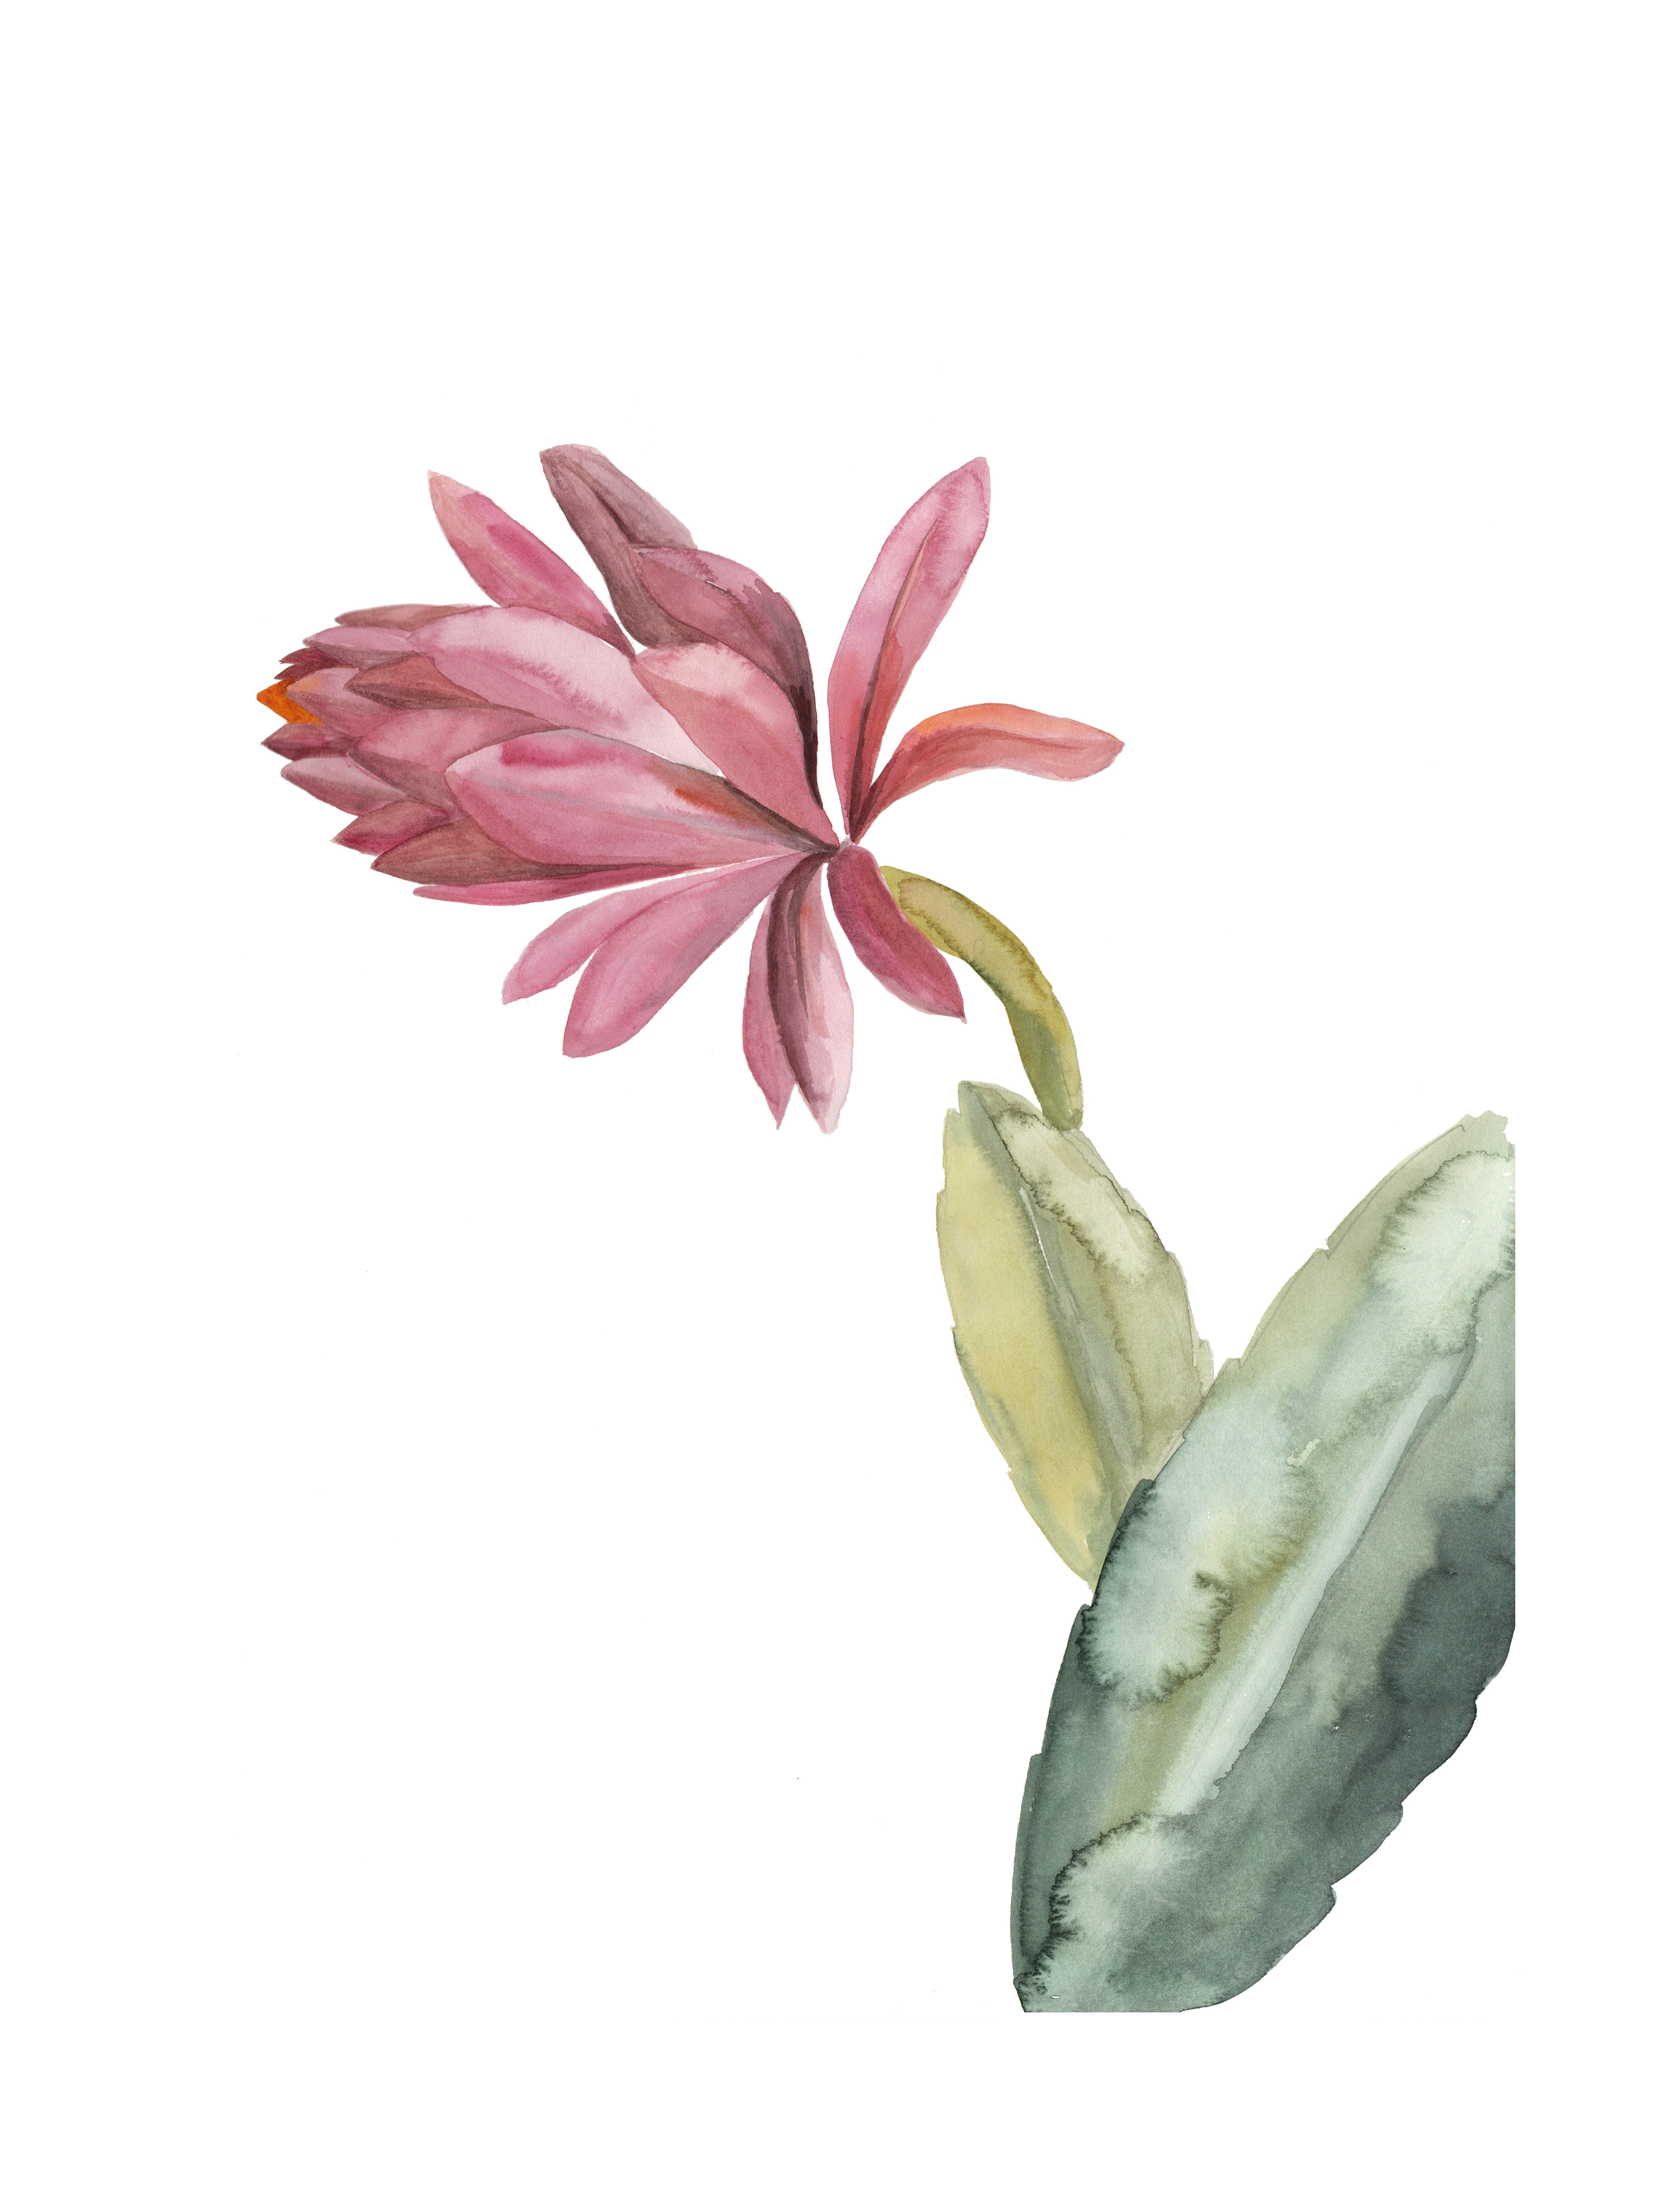 791-botanical-illustration---pink-cactus-flower.jpg